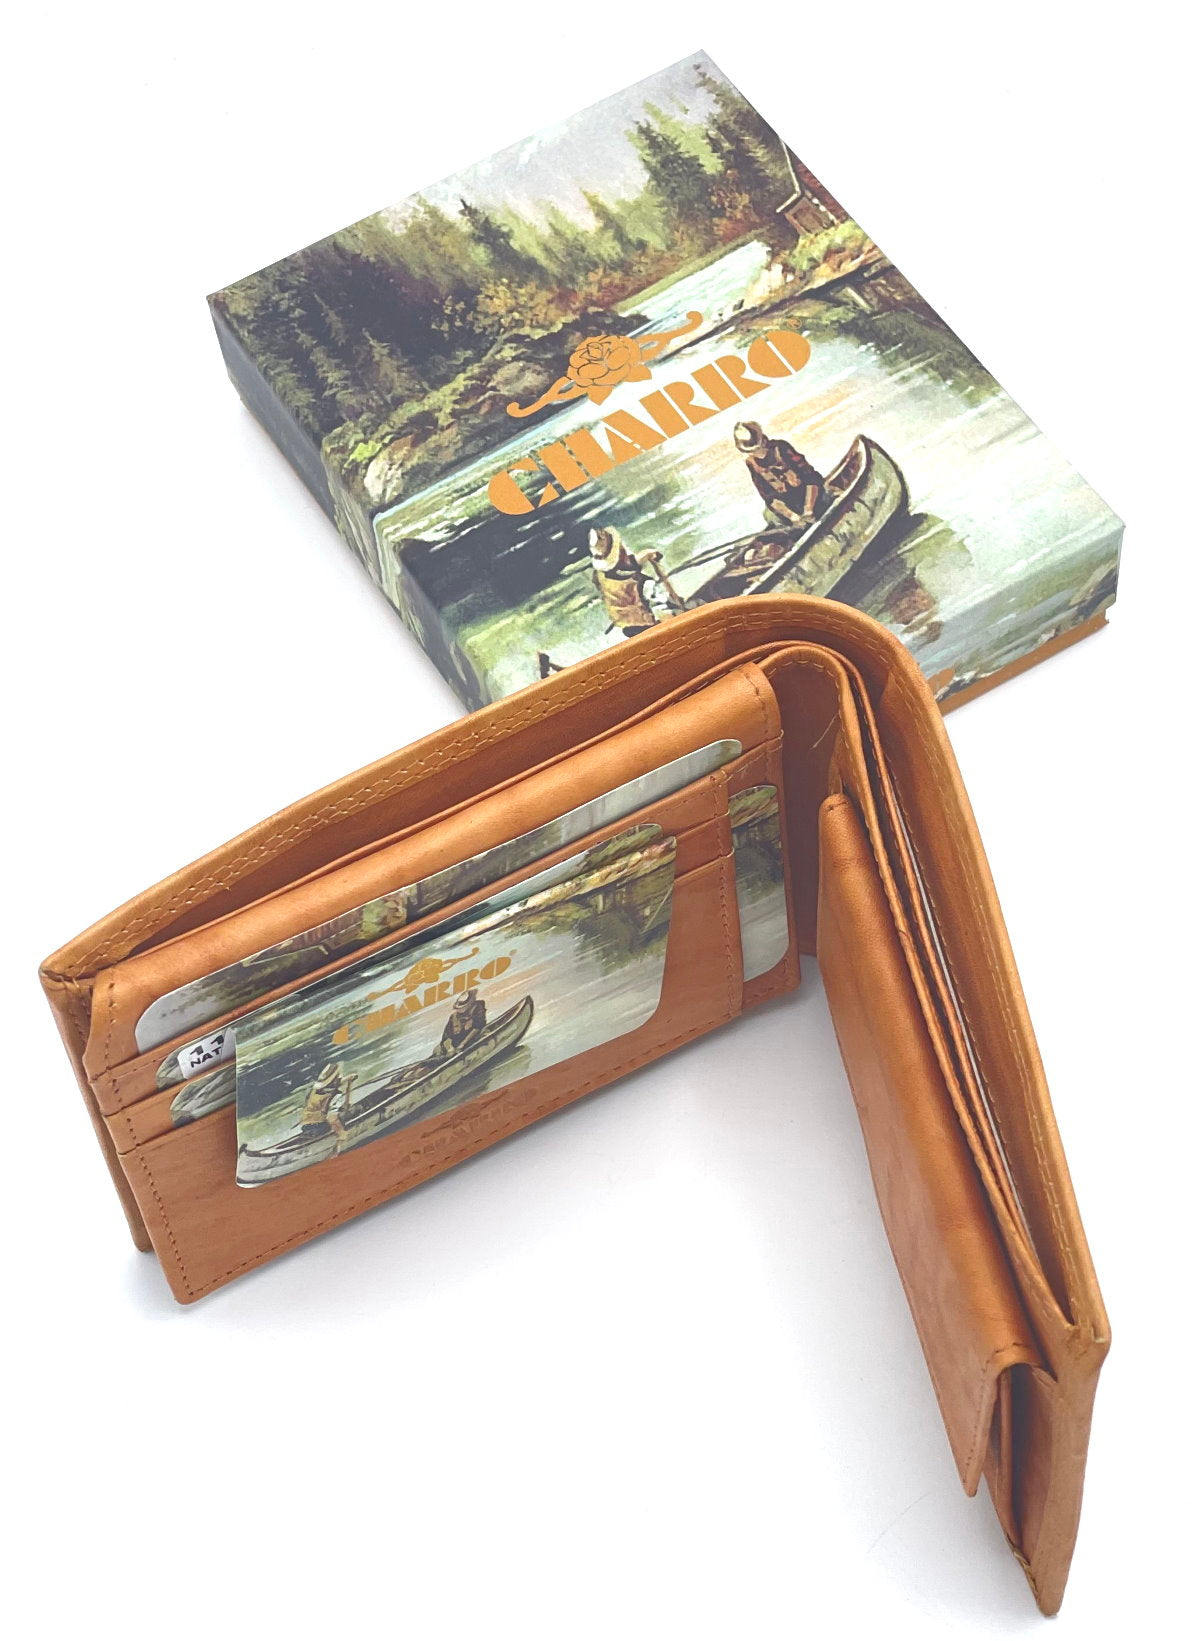 Genuine leather wallet for men, Brand Charro, art. MANT1123.422